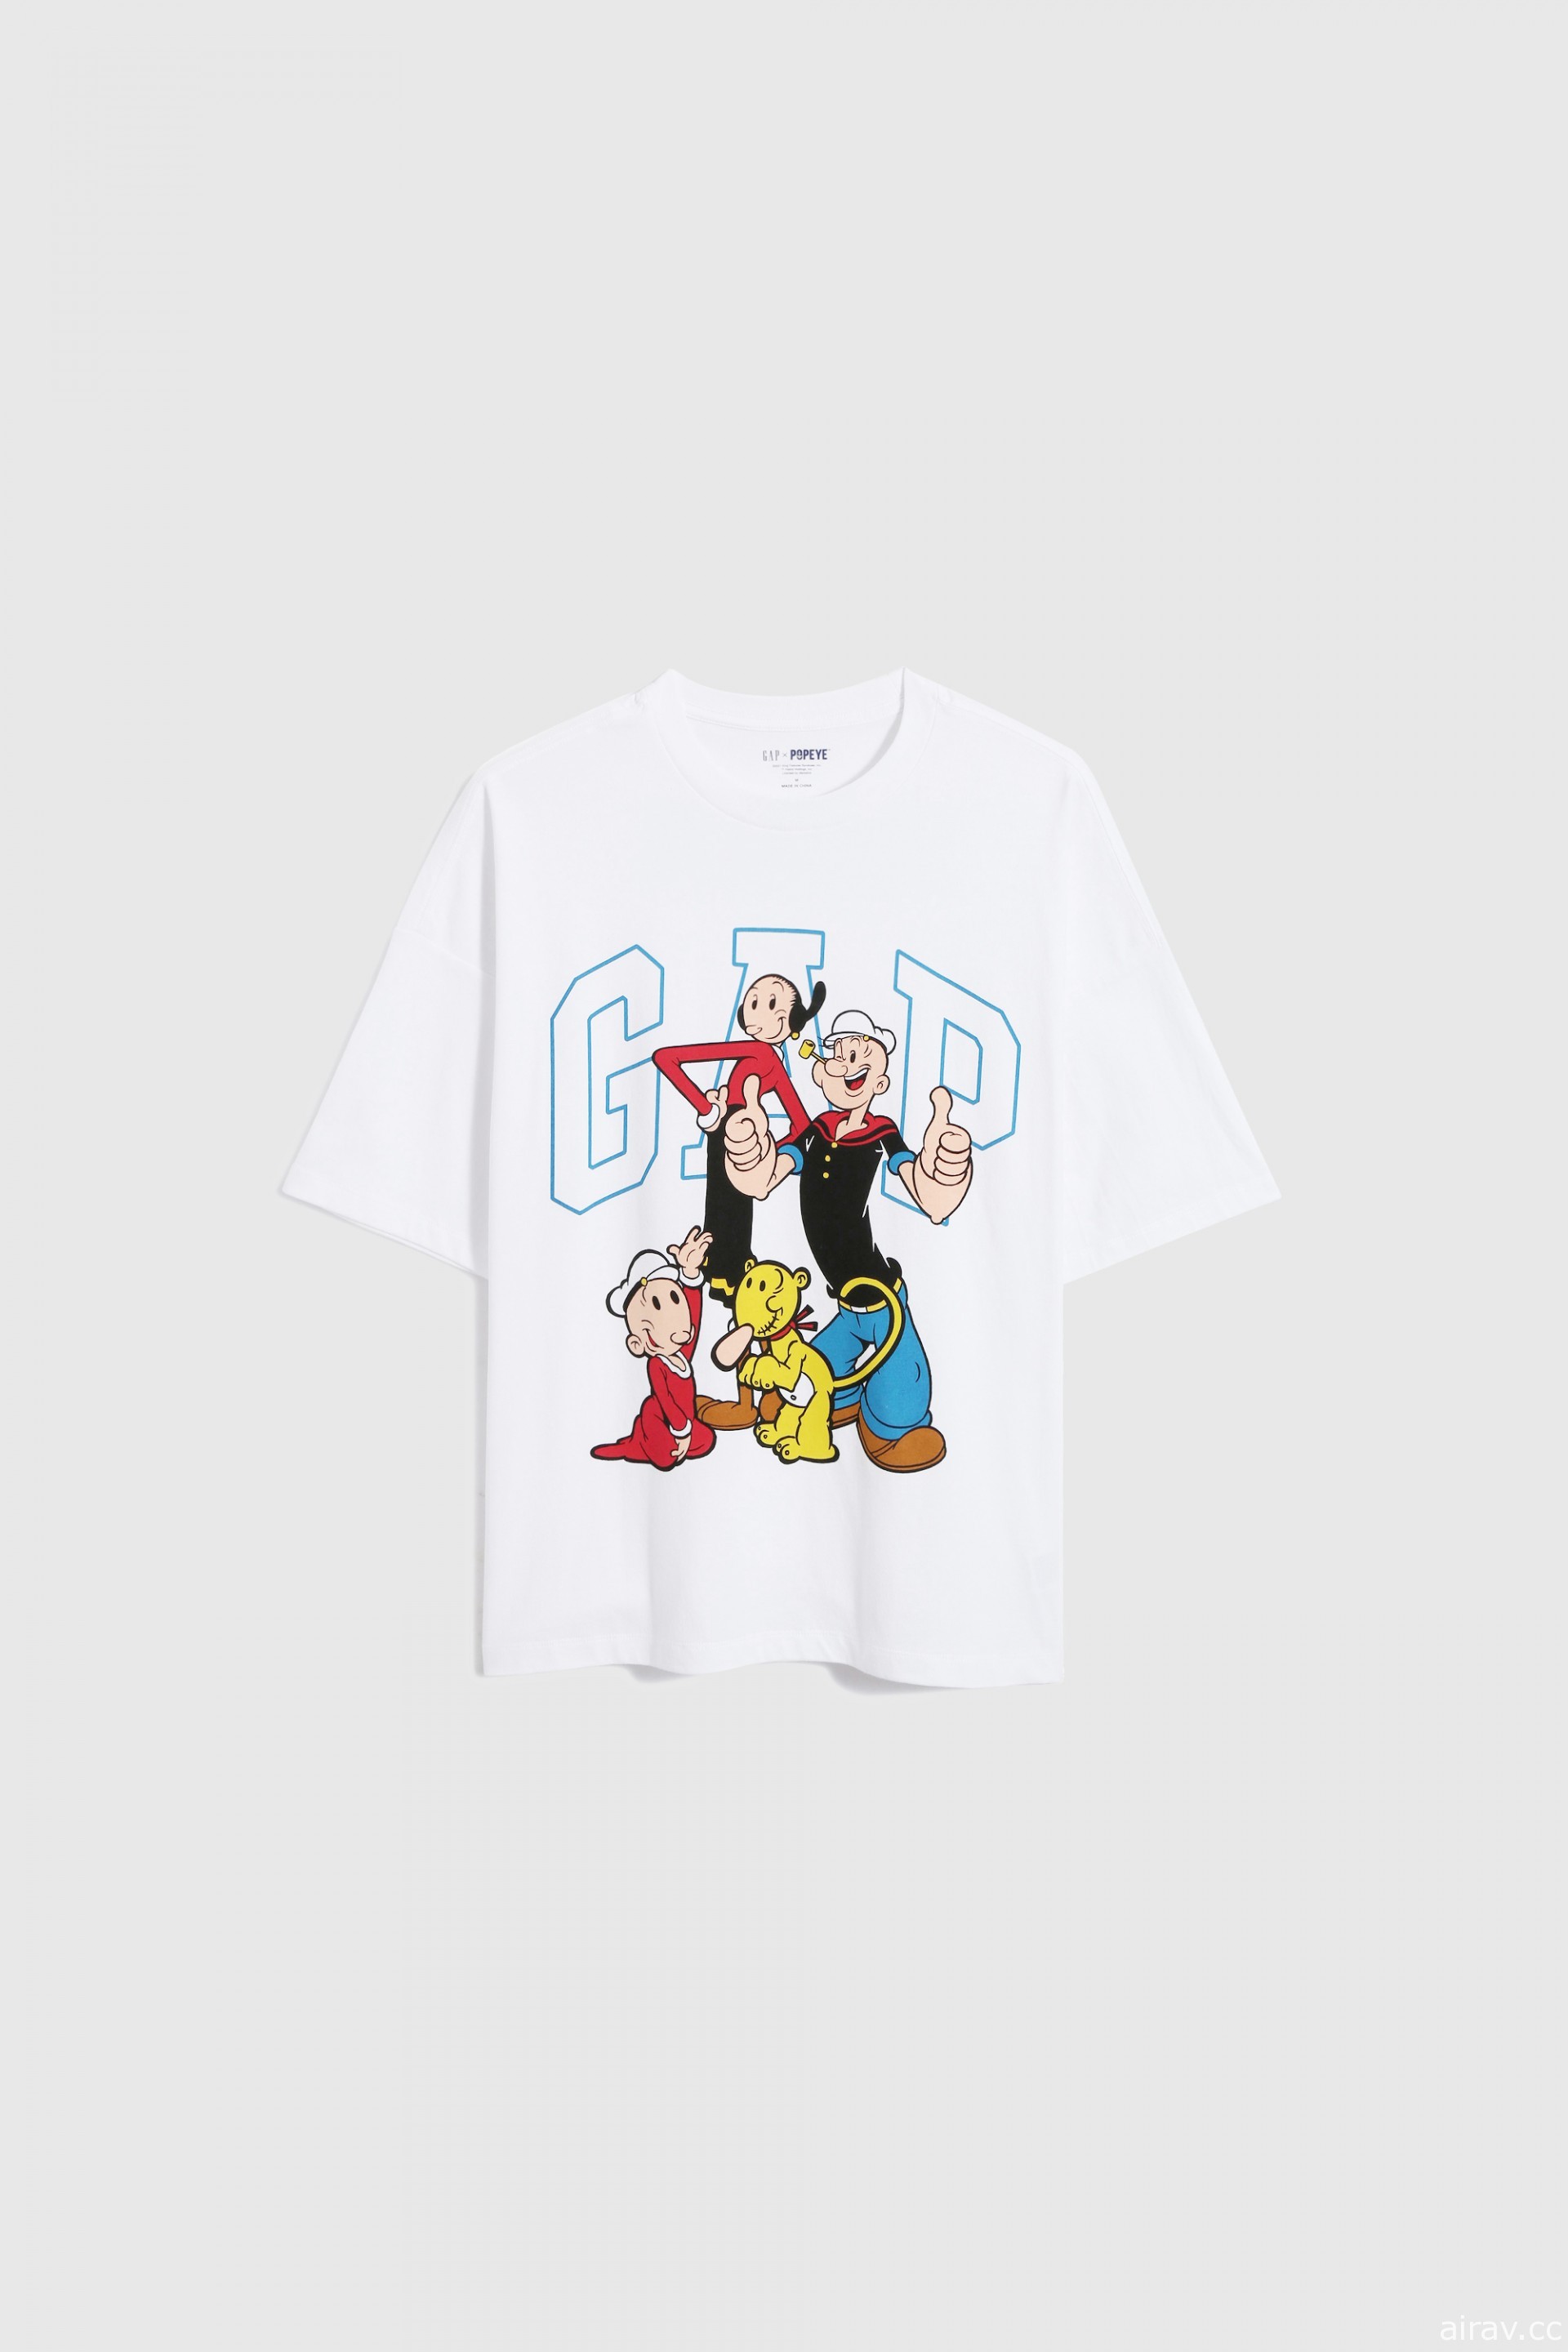 「GAP X POPEYE」《大力水手卜派》聯名系列服飾登台 7 月 18 日起線上搶先販售